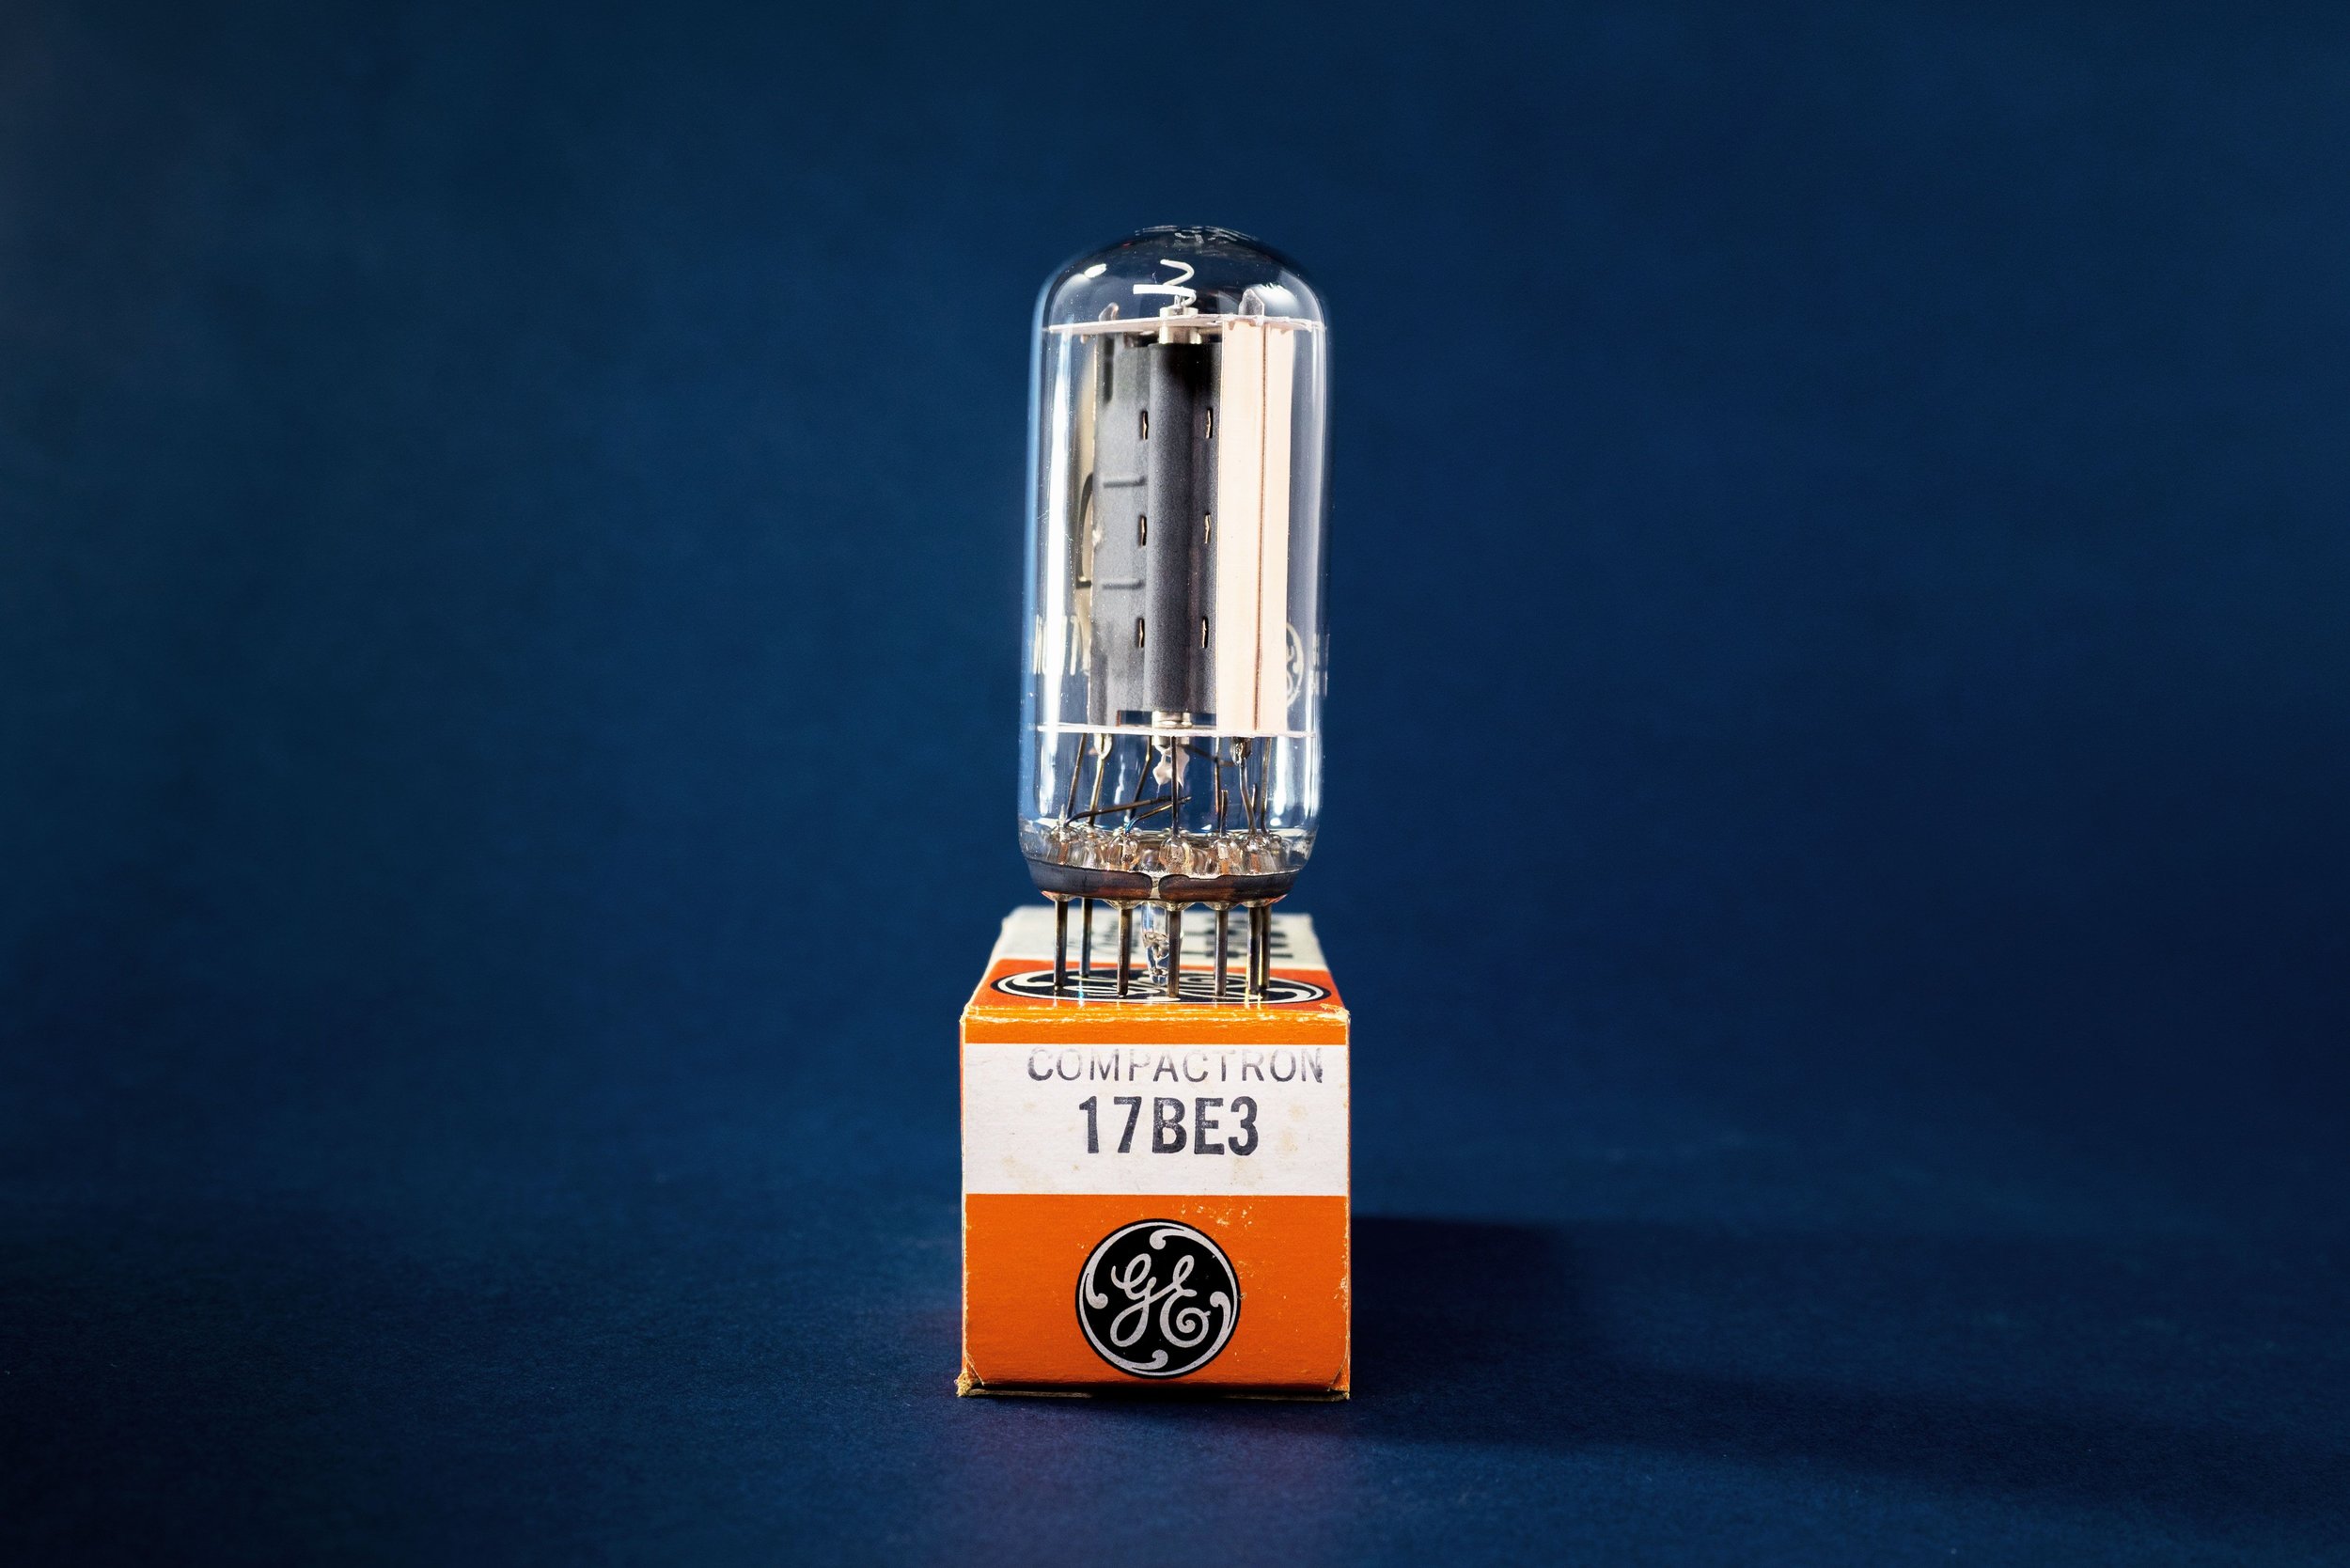 Vintage Component Spotlight: Compactron Tubes